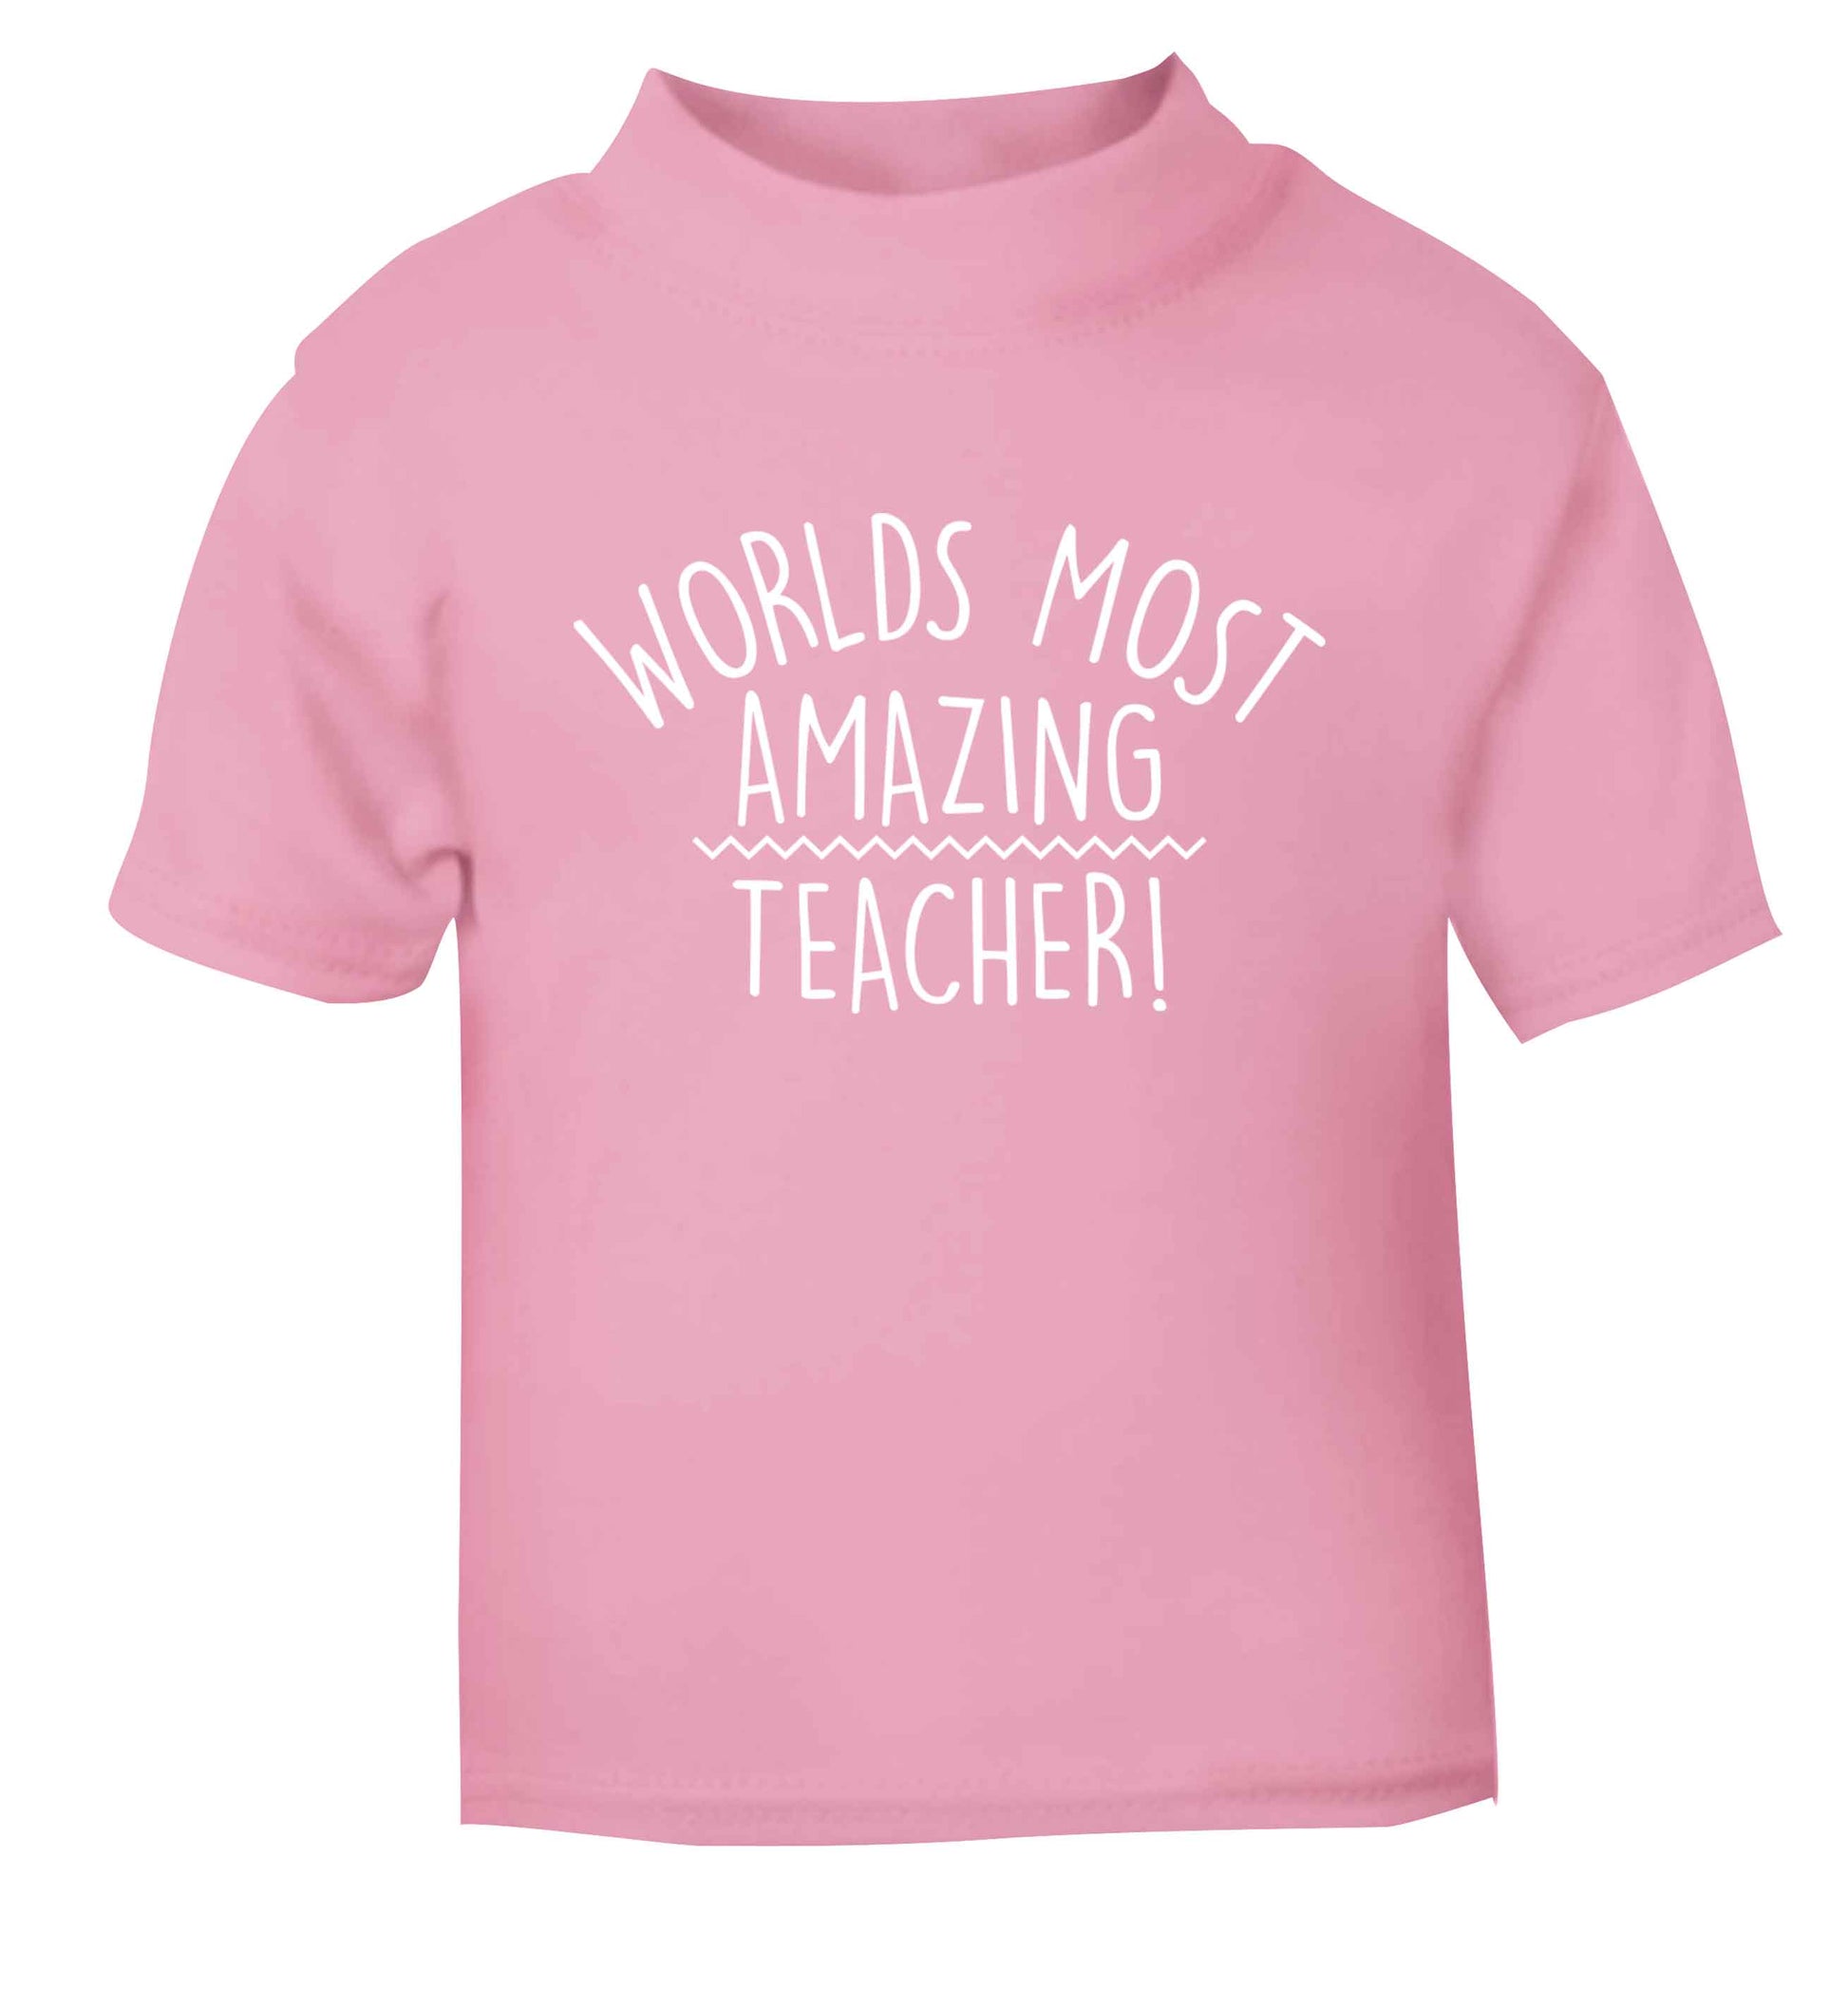 Worlds most amazing teacher light pink baby toddler Tshirt 2 Years